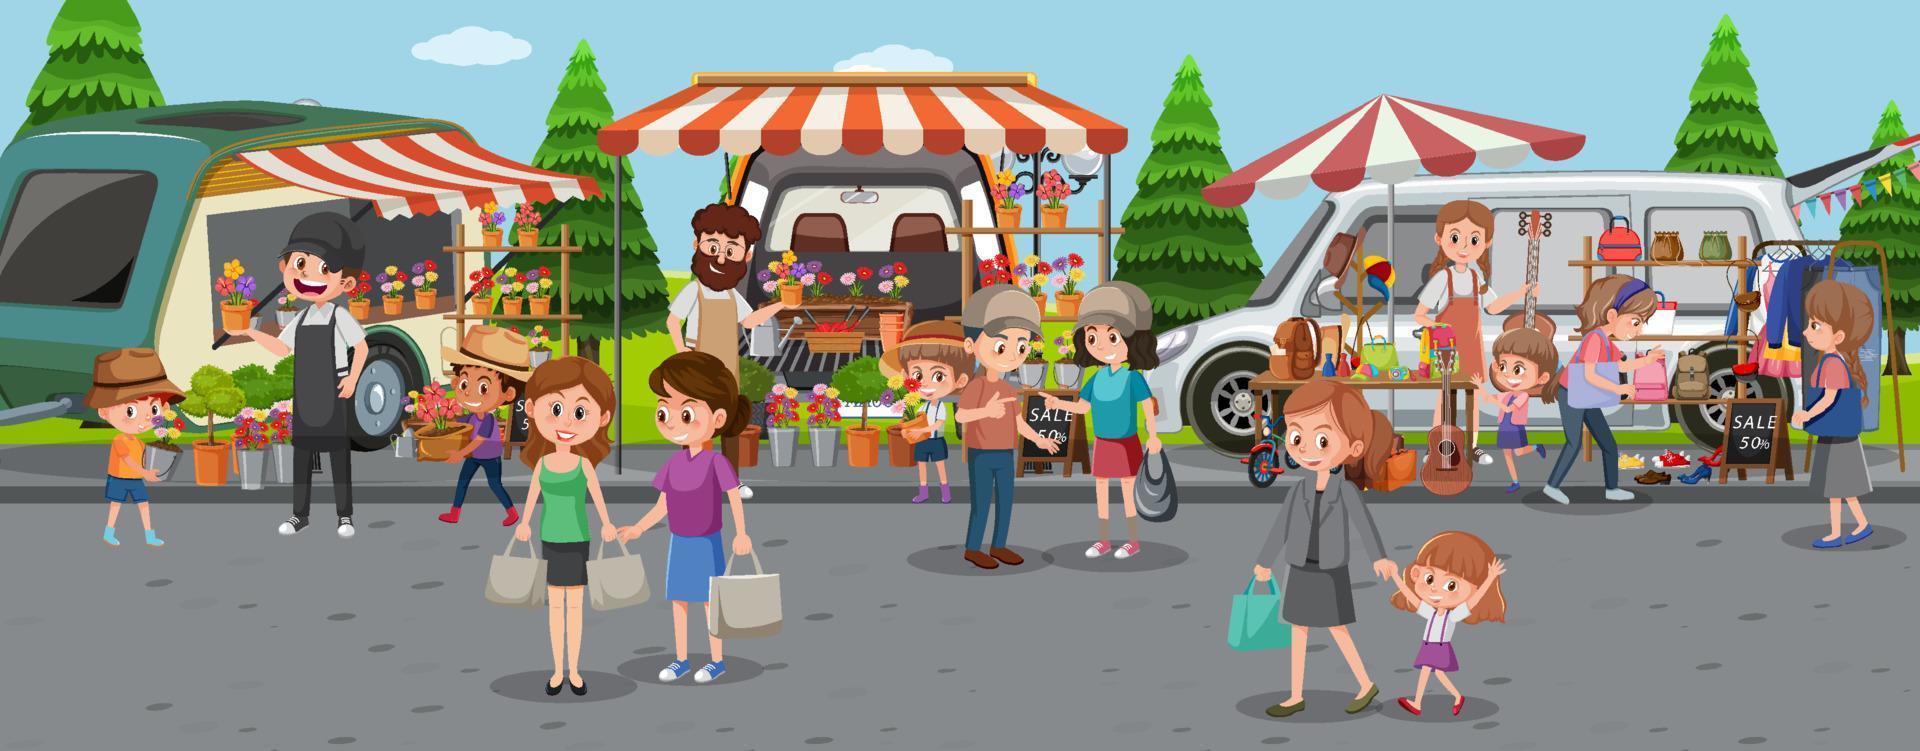 Flea market scene in cartoon style vector